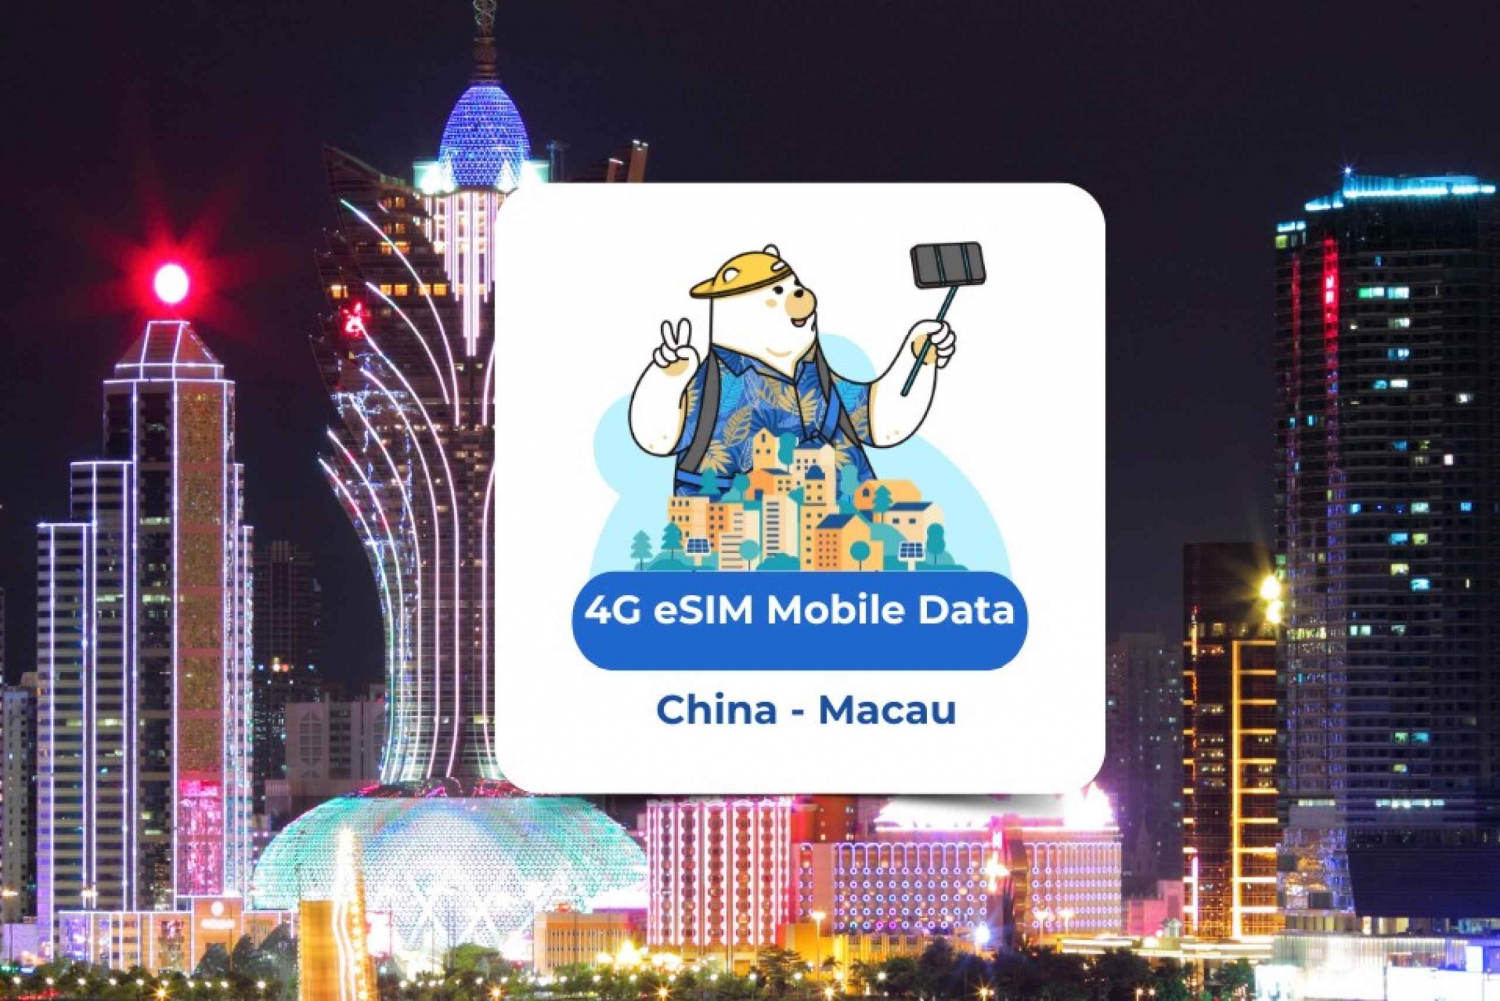 China - Macau : eSIM Mobiele Gegevens